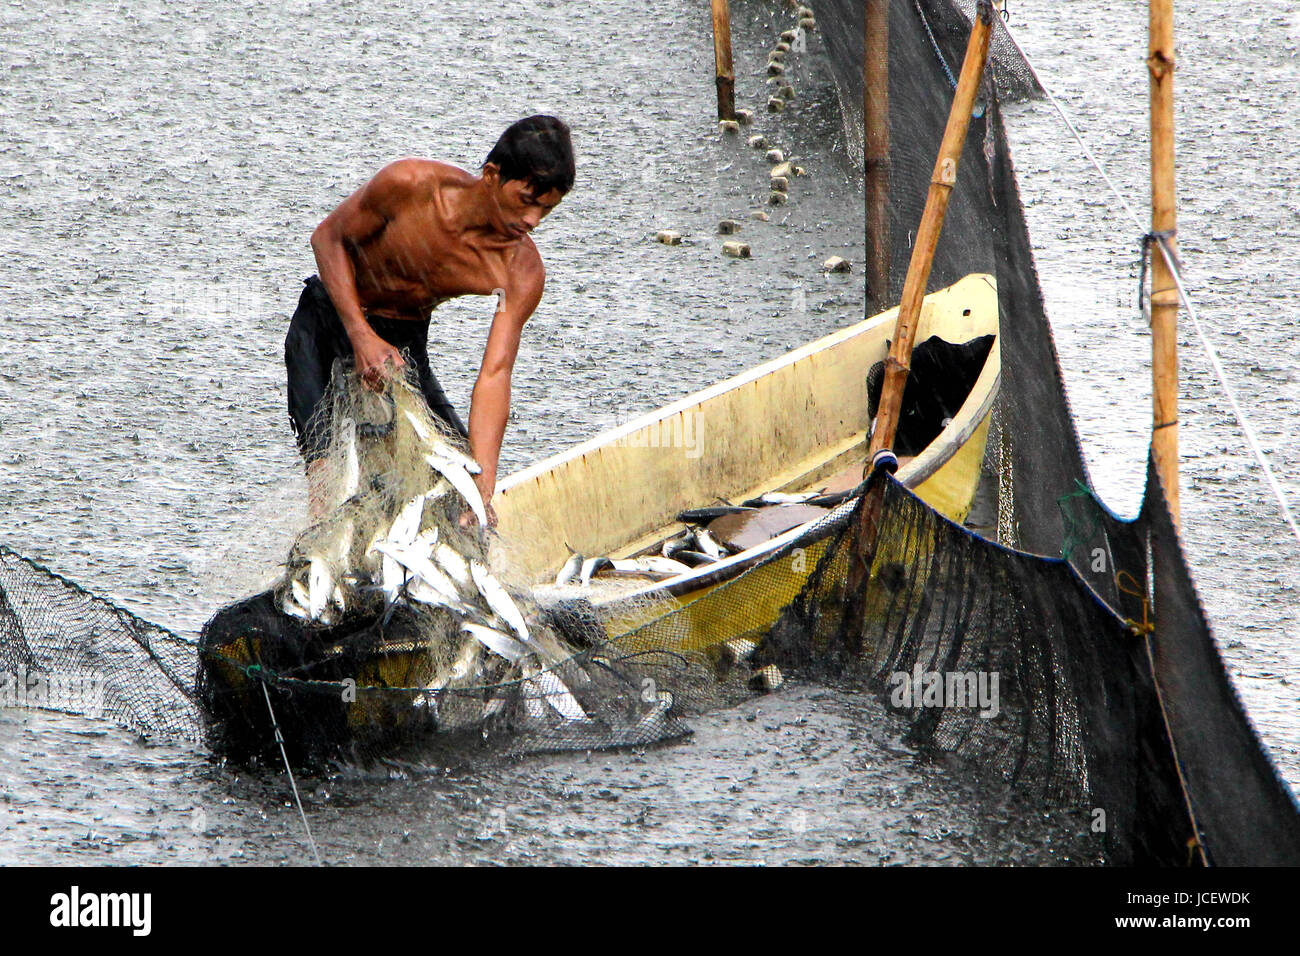 Fisherman makes a bountiful harvest of Milk fish or “Bangus” at a